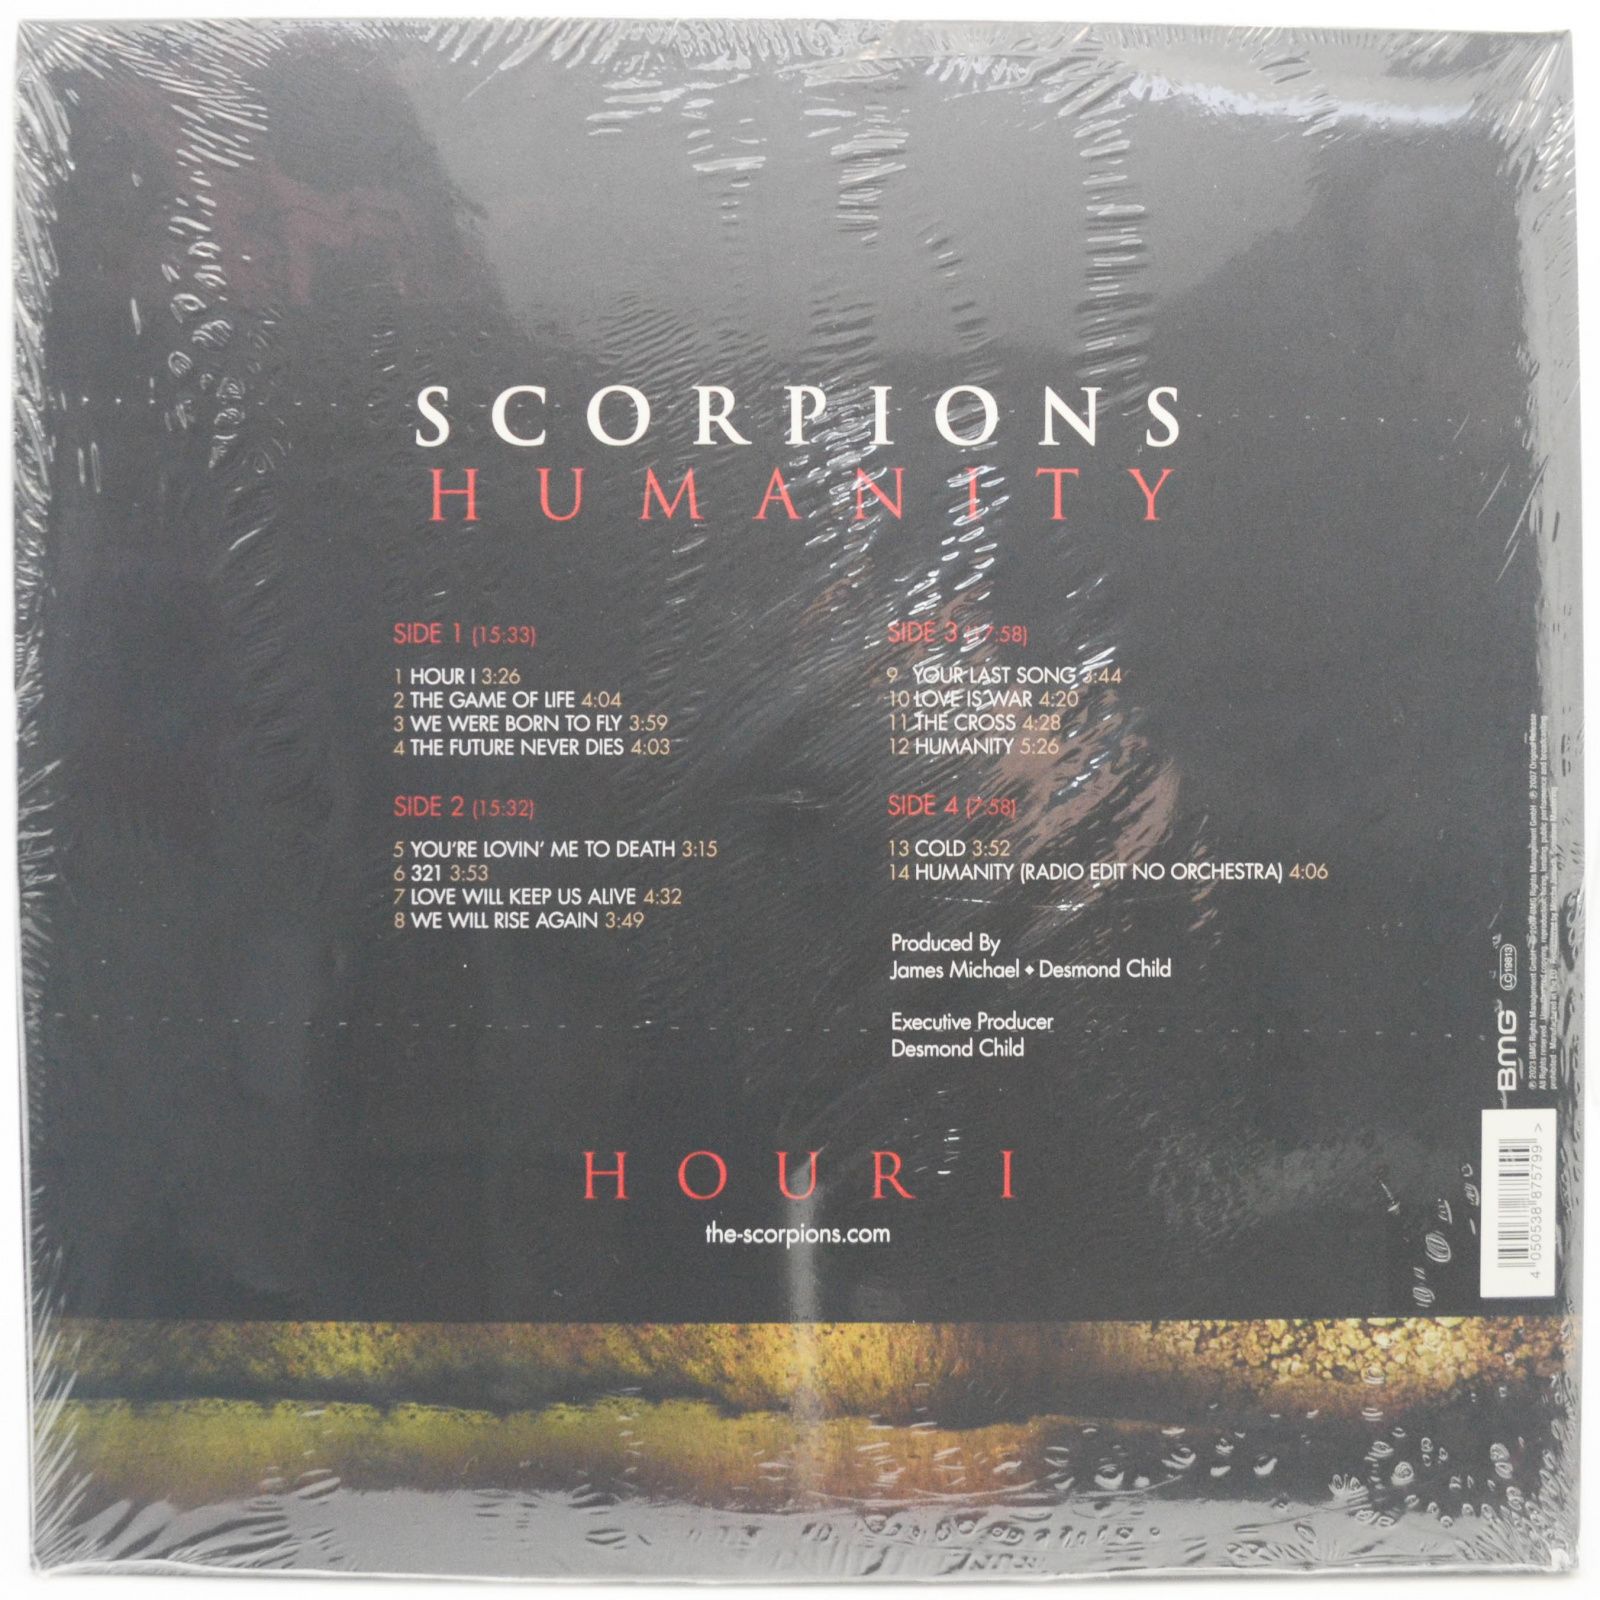 Scorpions — Humanity - Hour I (2LP), 2007